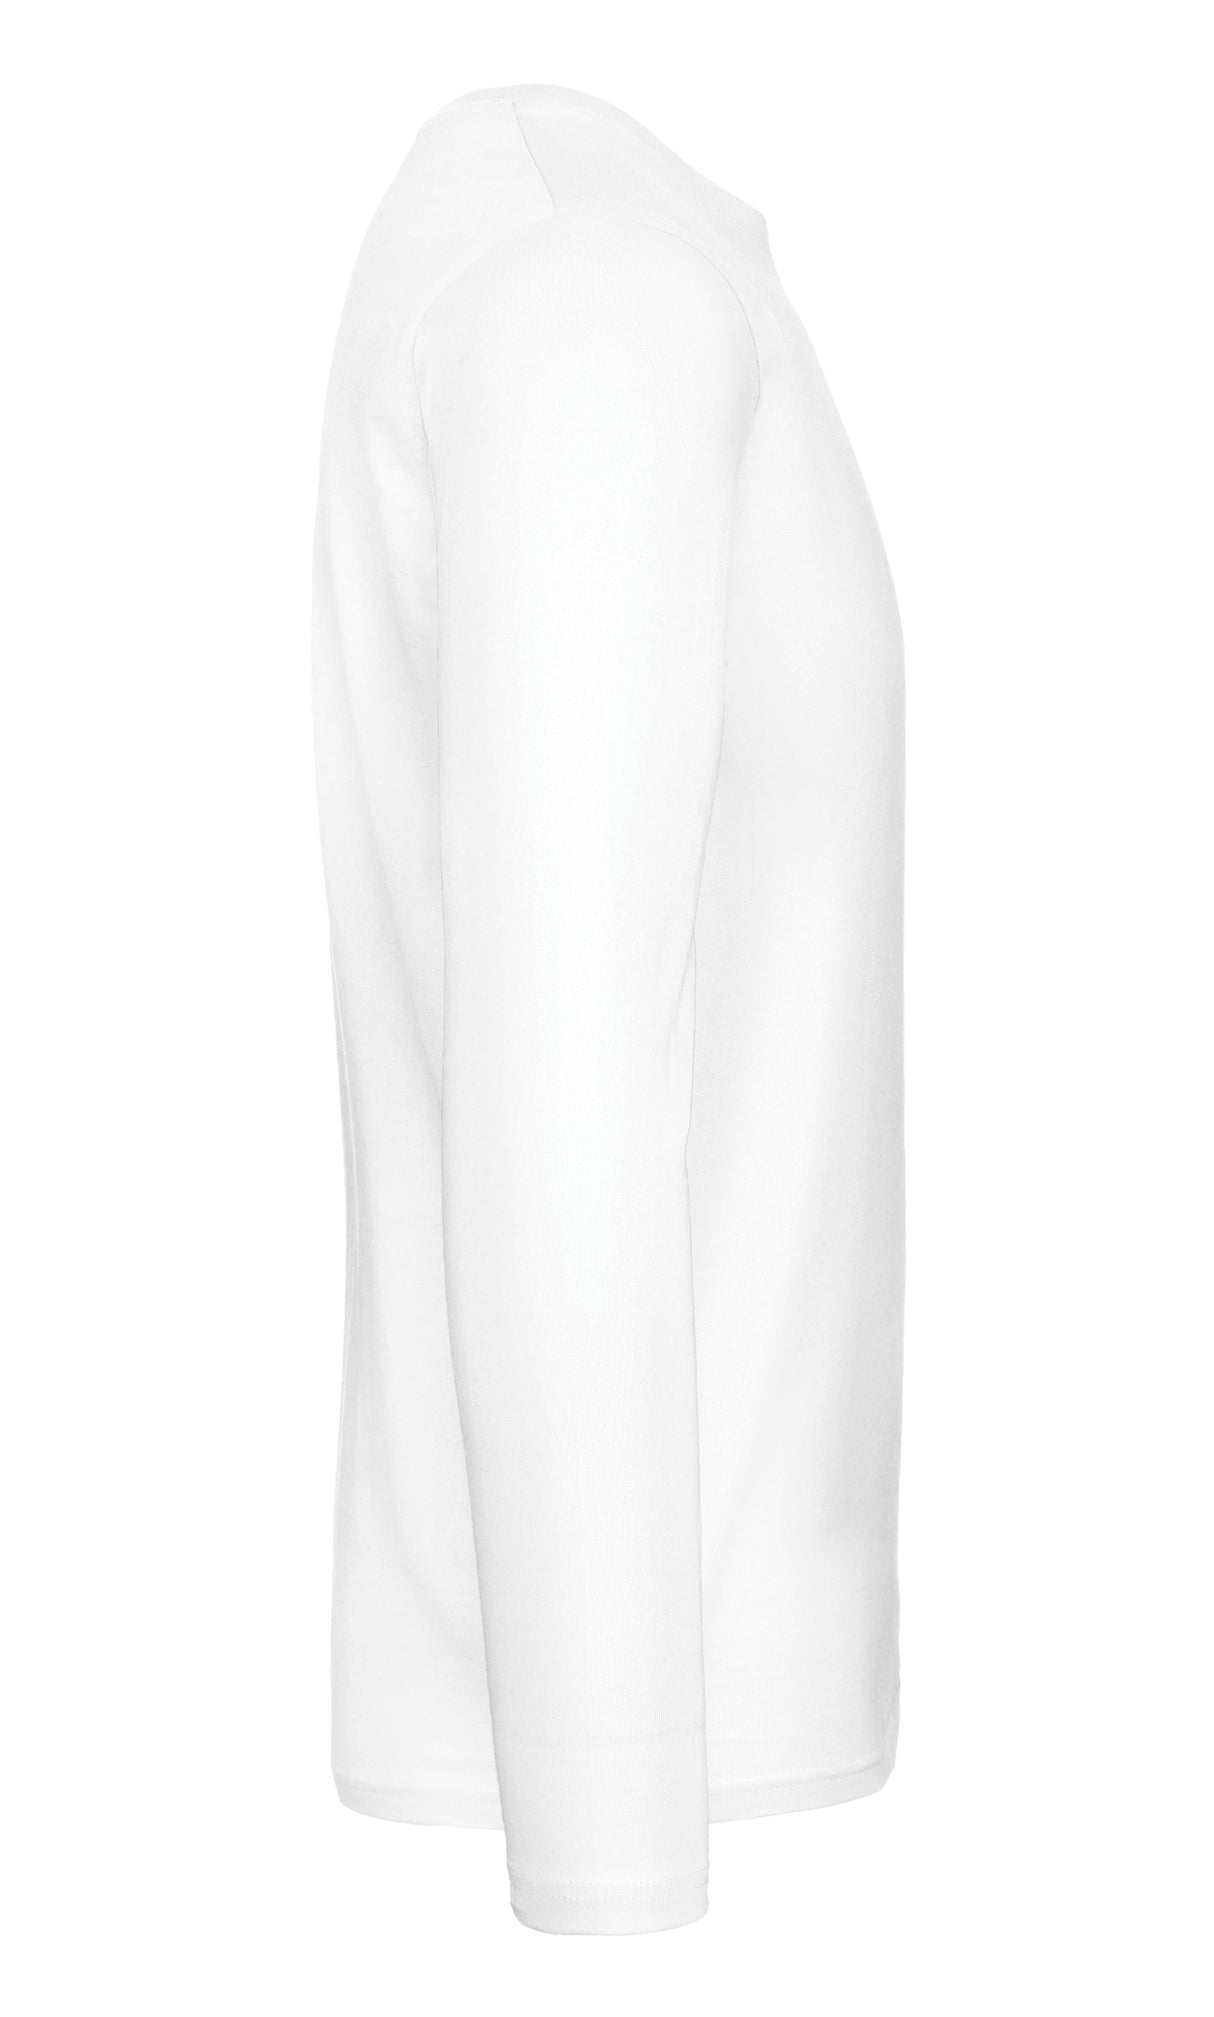 B&C Collection #E190 Long Sleeve